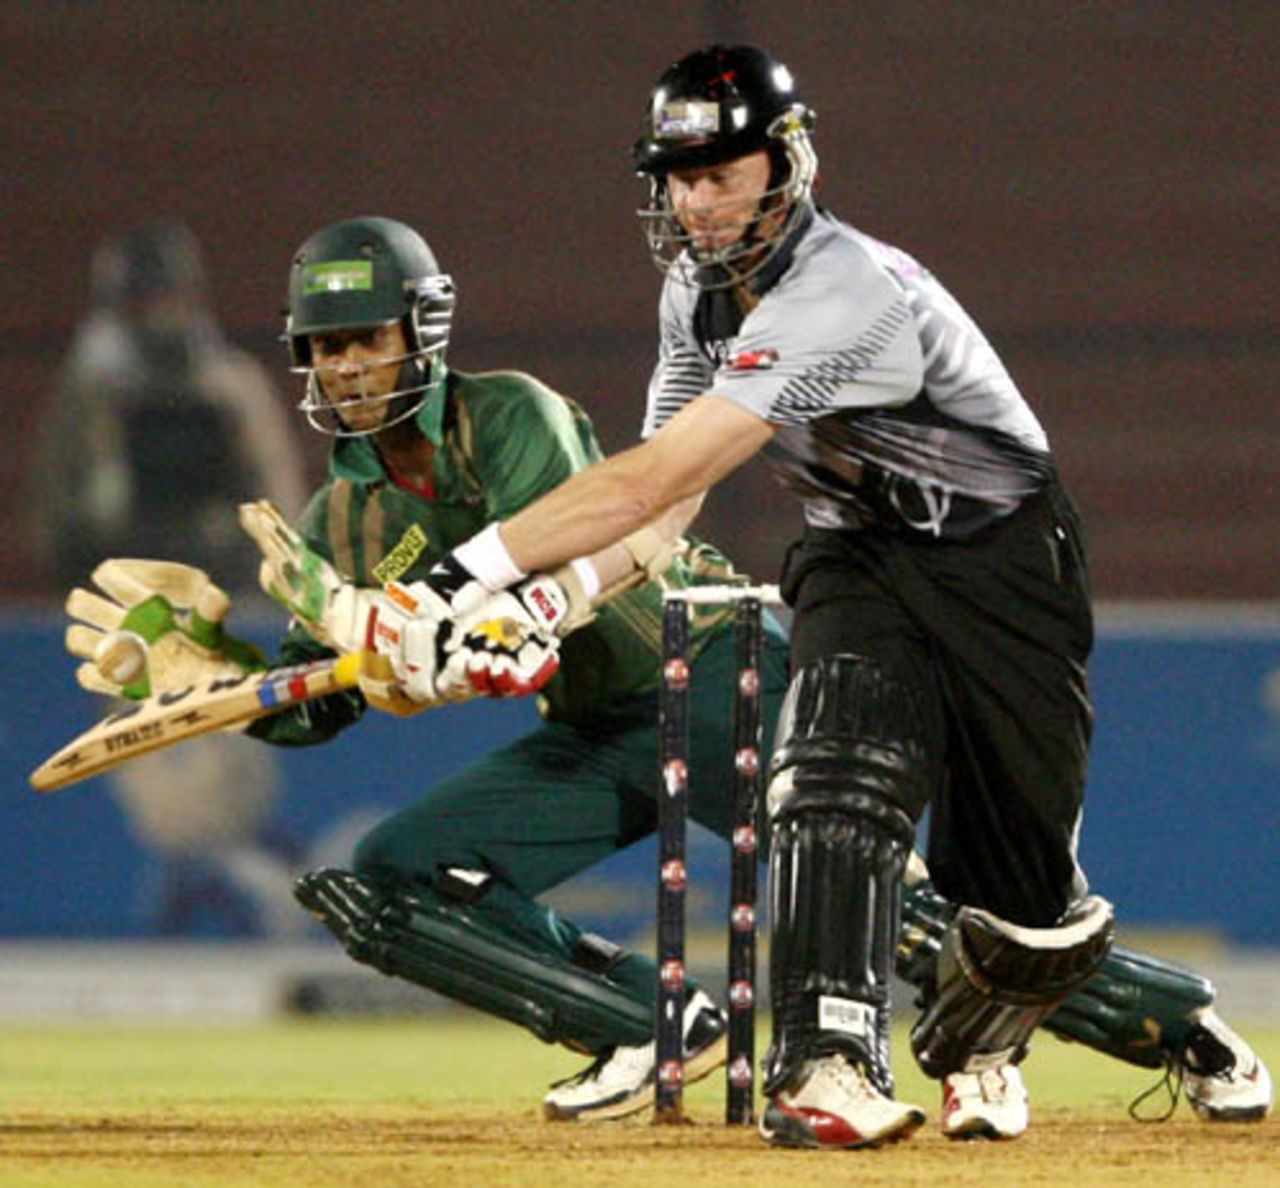 Dhiman Ghosh looks to collect the ball down the leg side, ICL Bangladesh XI v ICL World XI, Ahmedabad, November 23, 2008